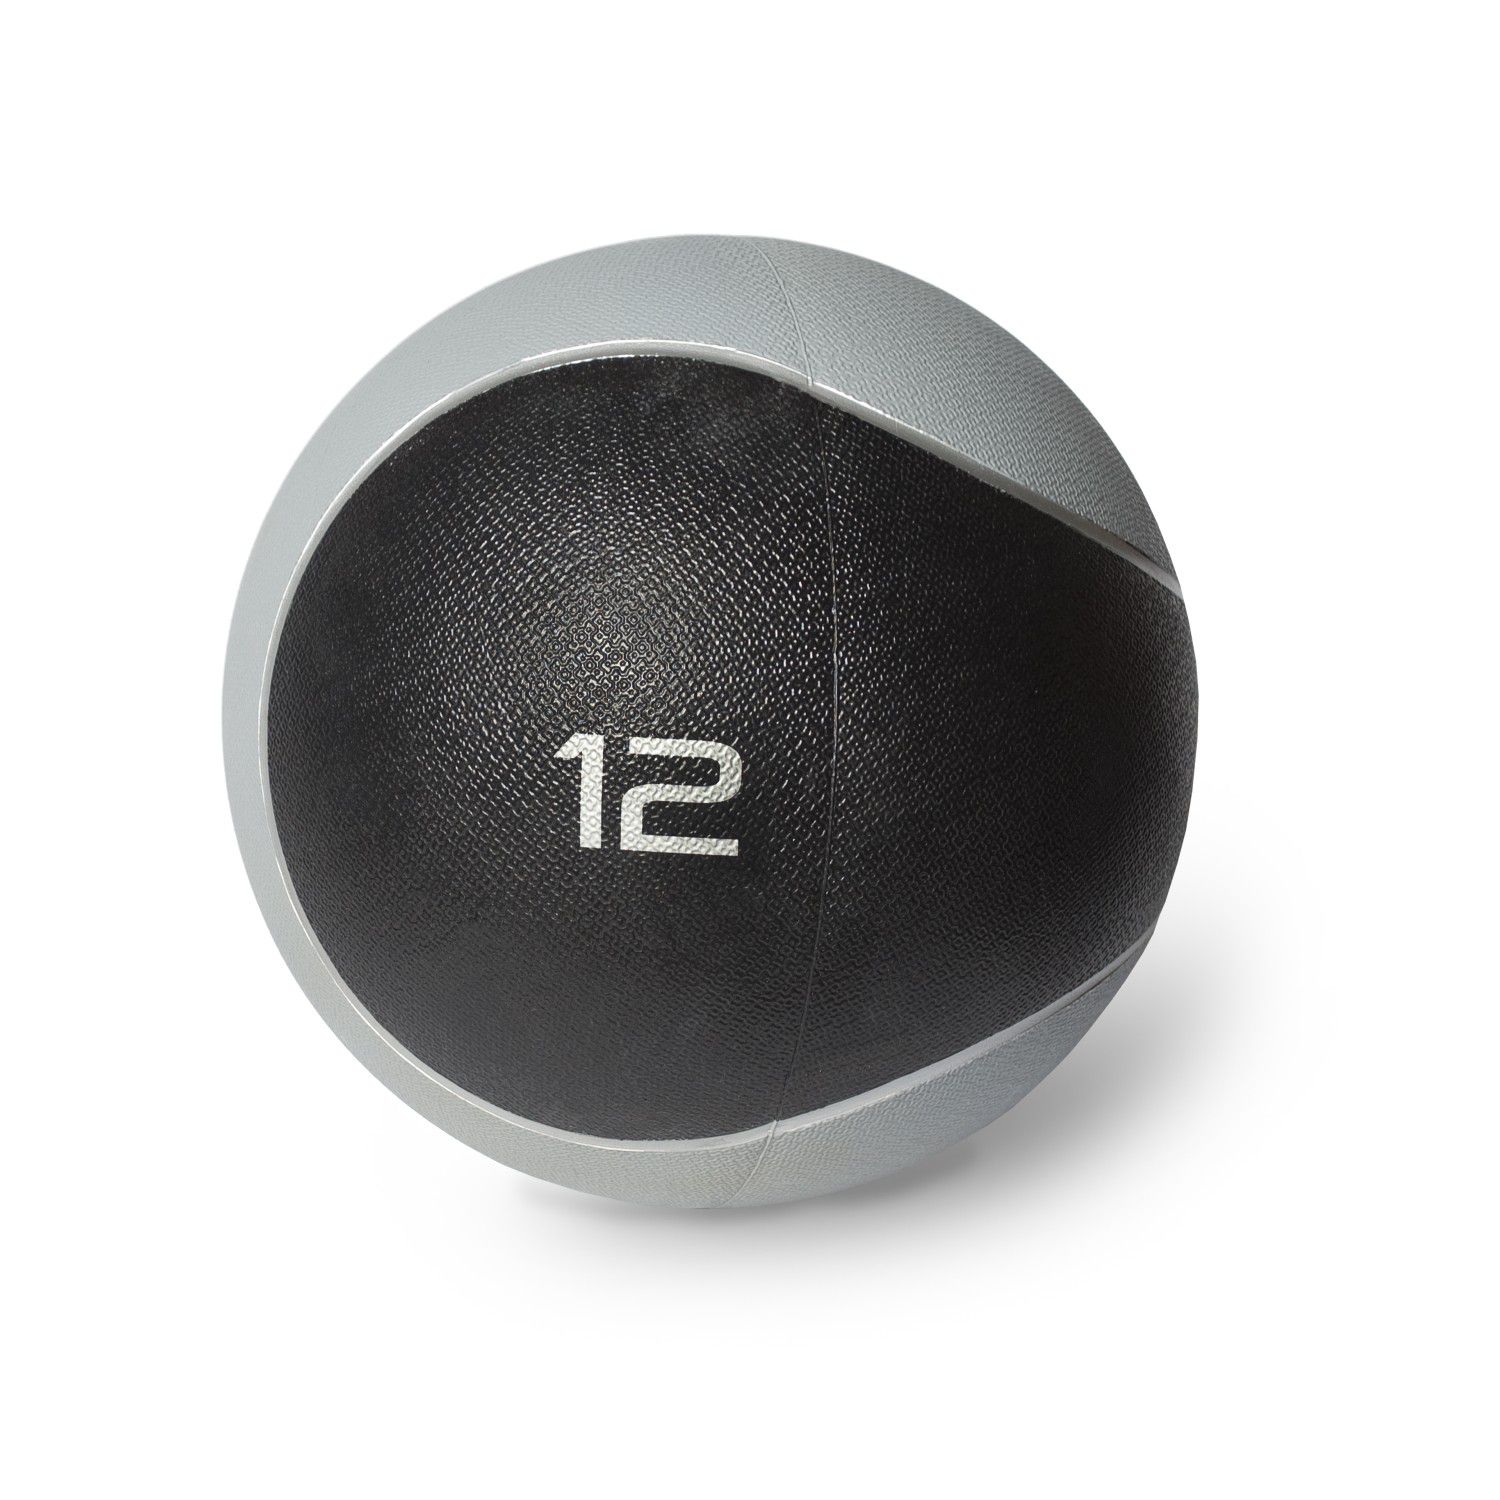 12lb Barbell Rubber Medicine Ball